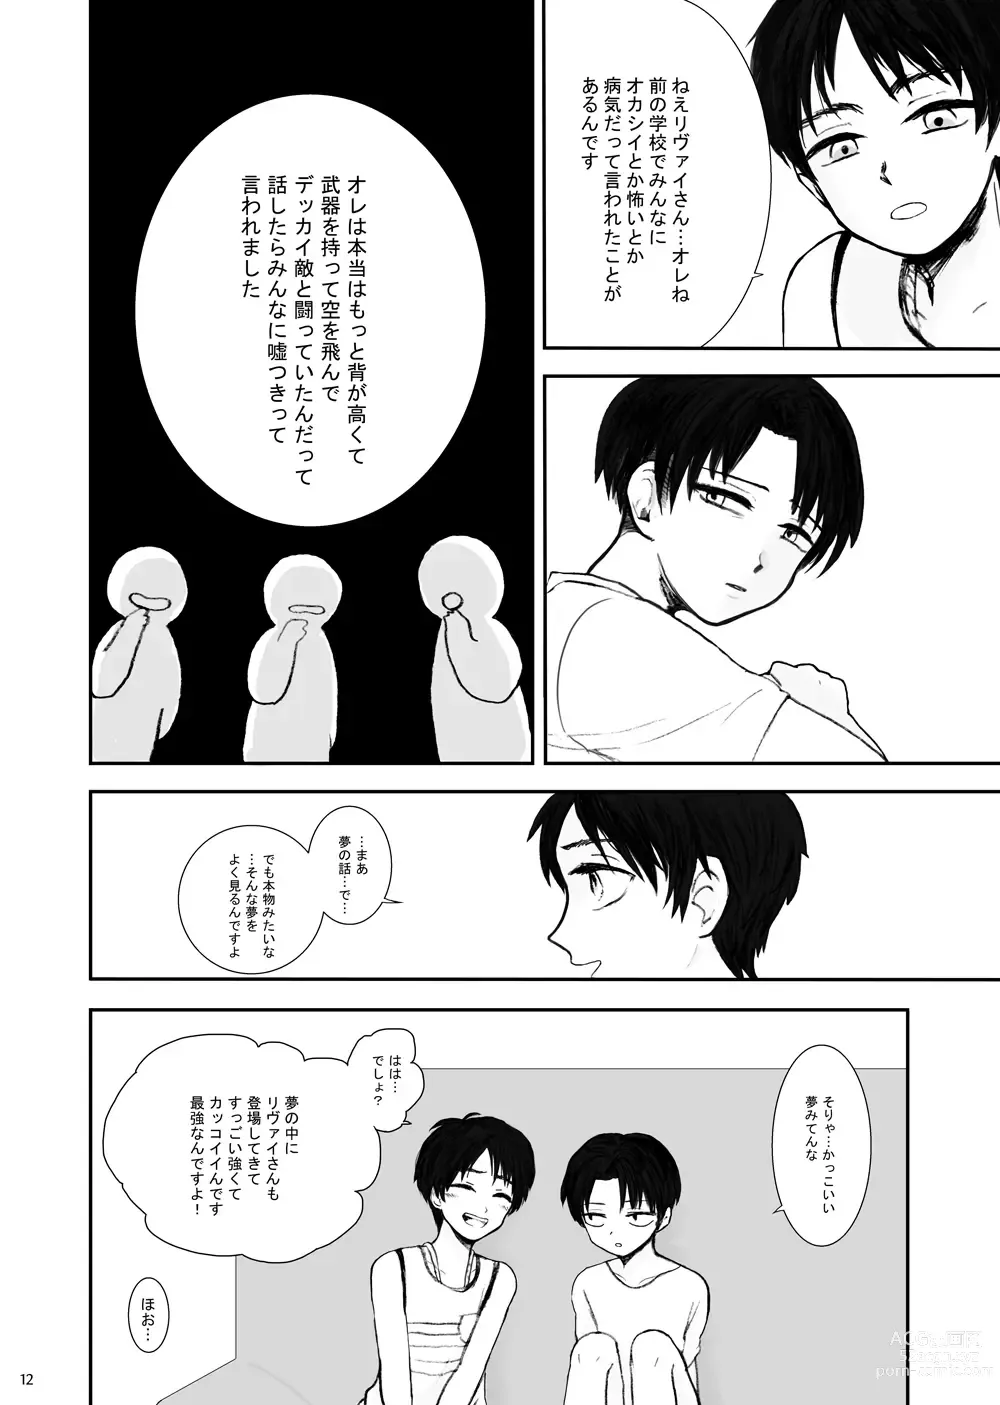 Page 8 of doujinshi Hizumi